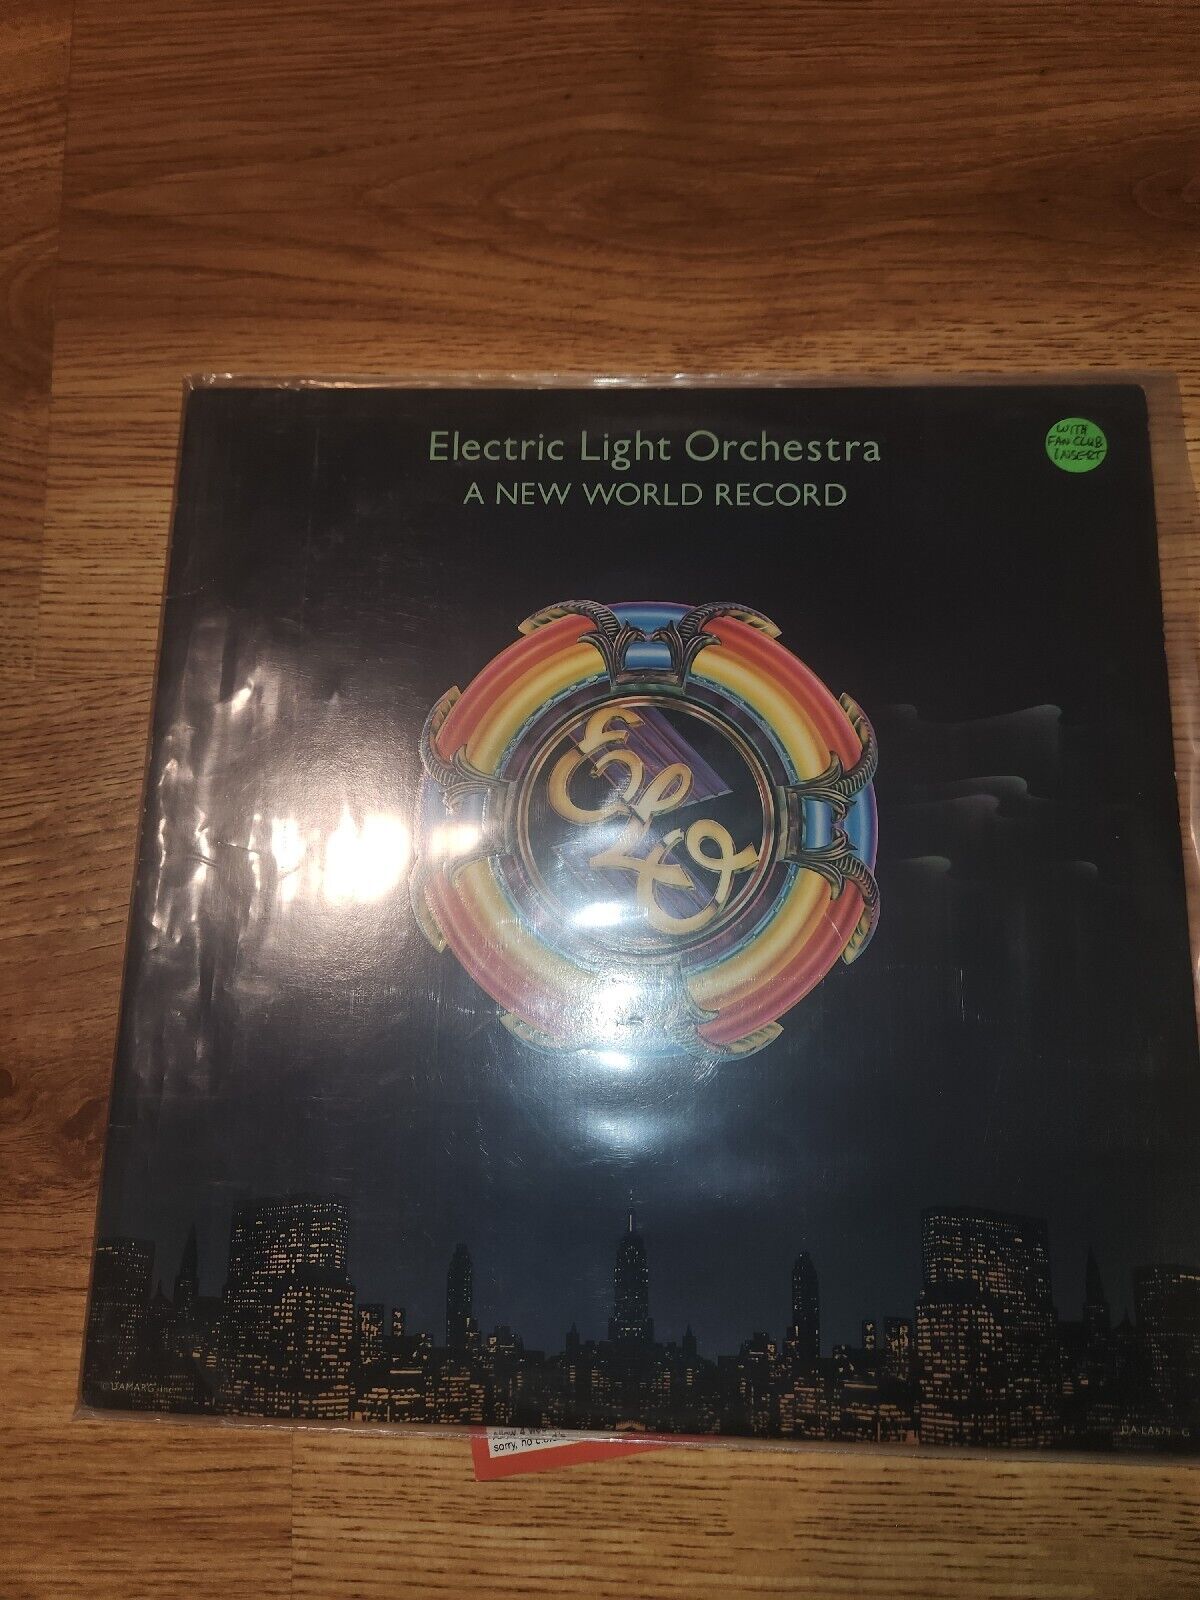 Electric Light Orchestra ELO A New World Record Vinyl LP Album 1976 vg++